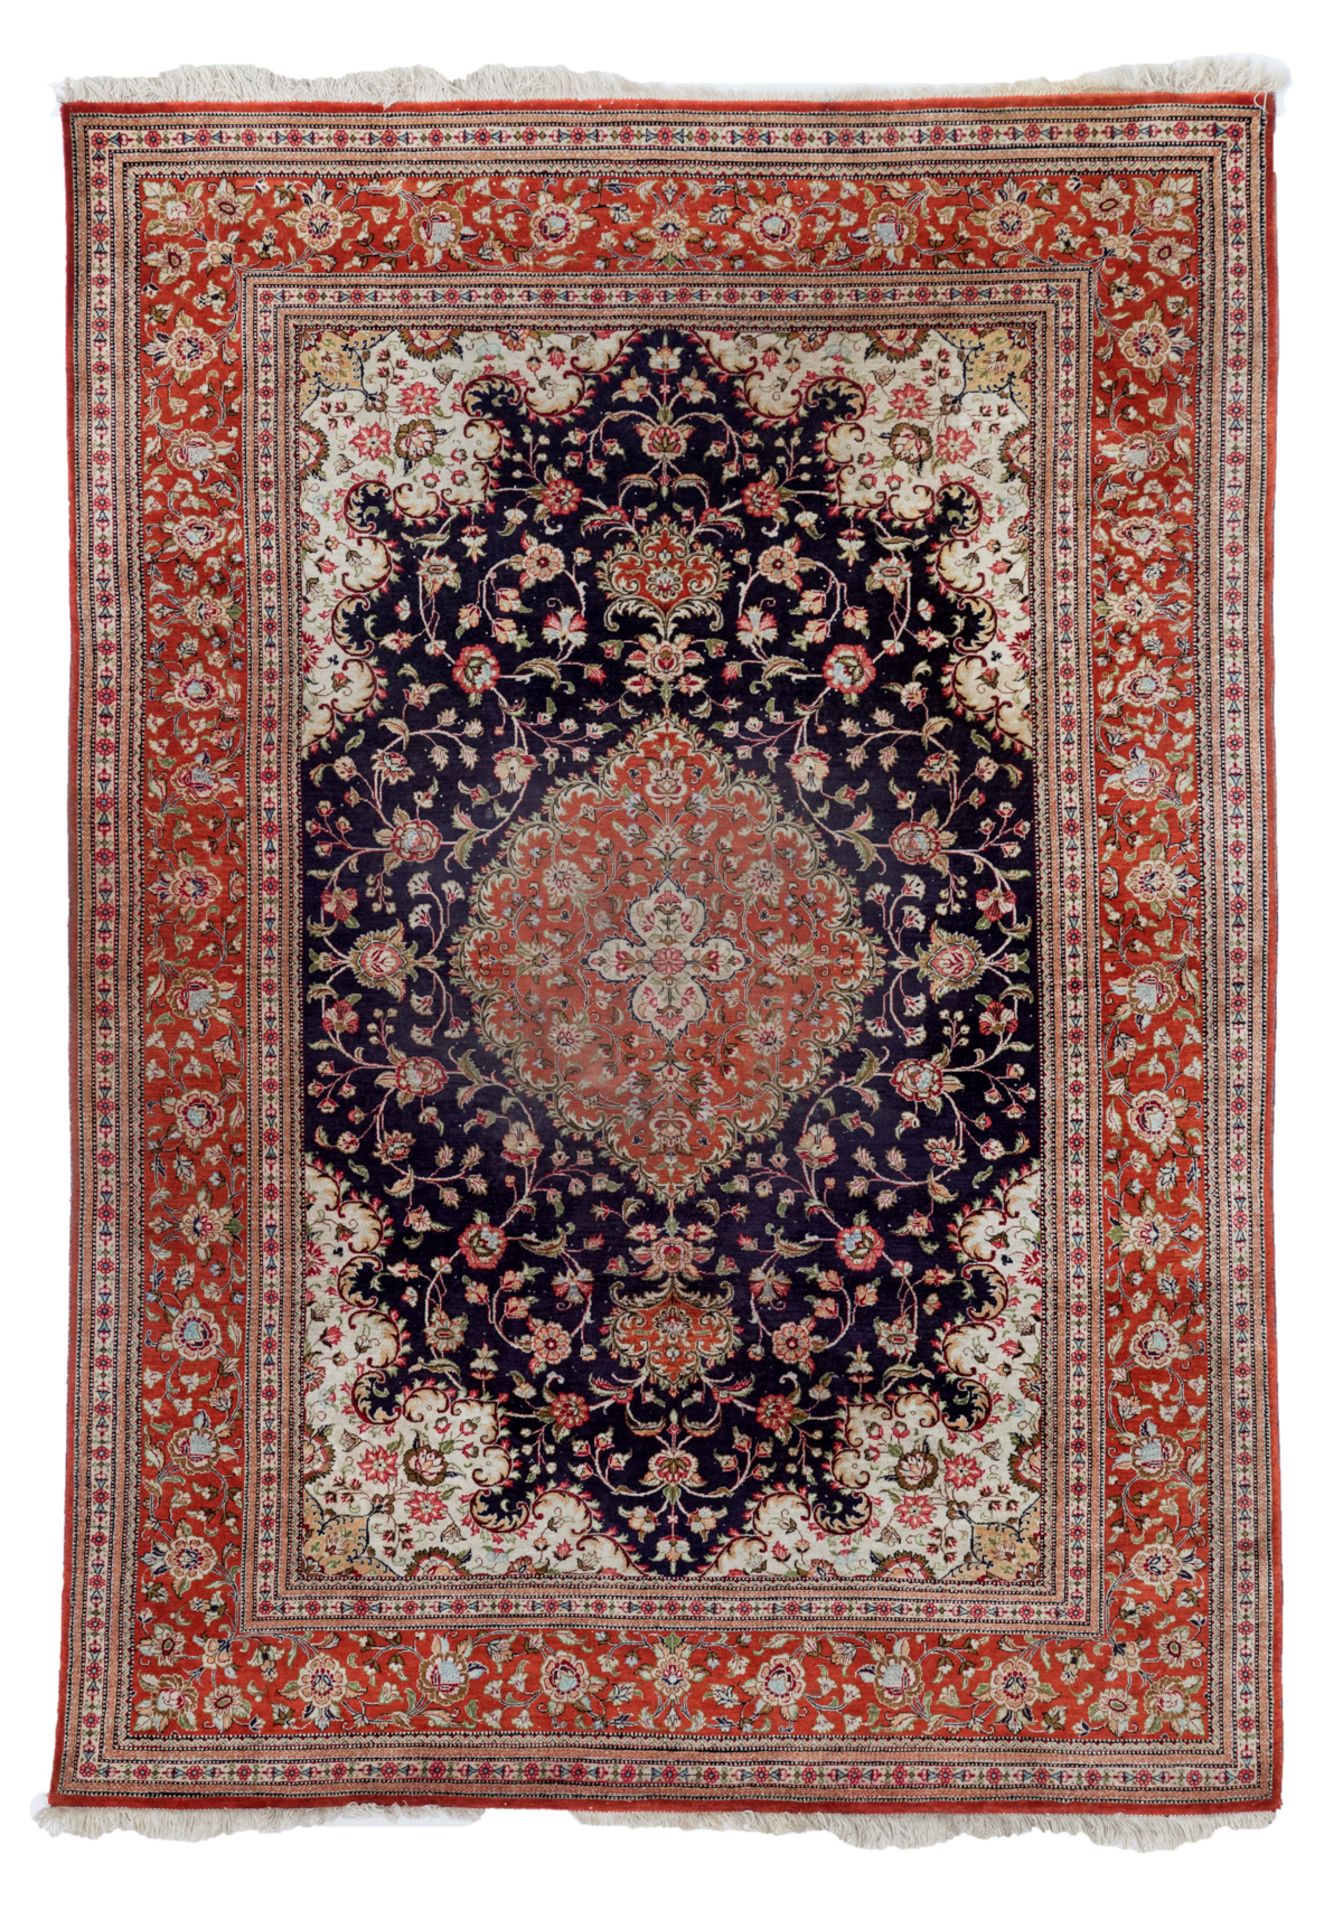 An Oriental silk carpet with floral motifs, 138 x 198 cm